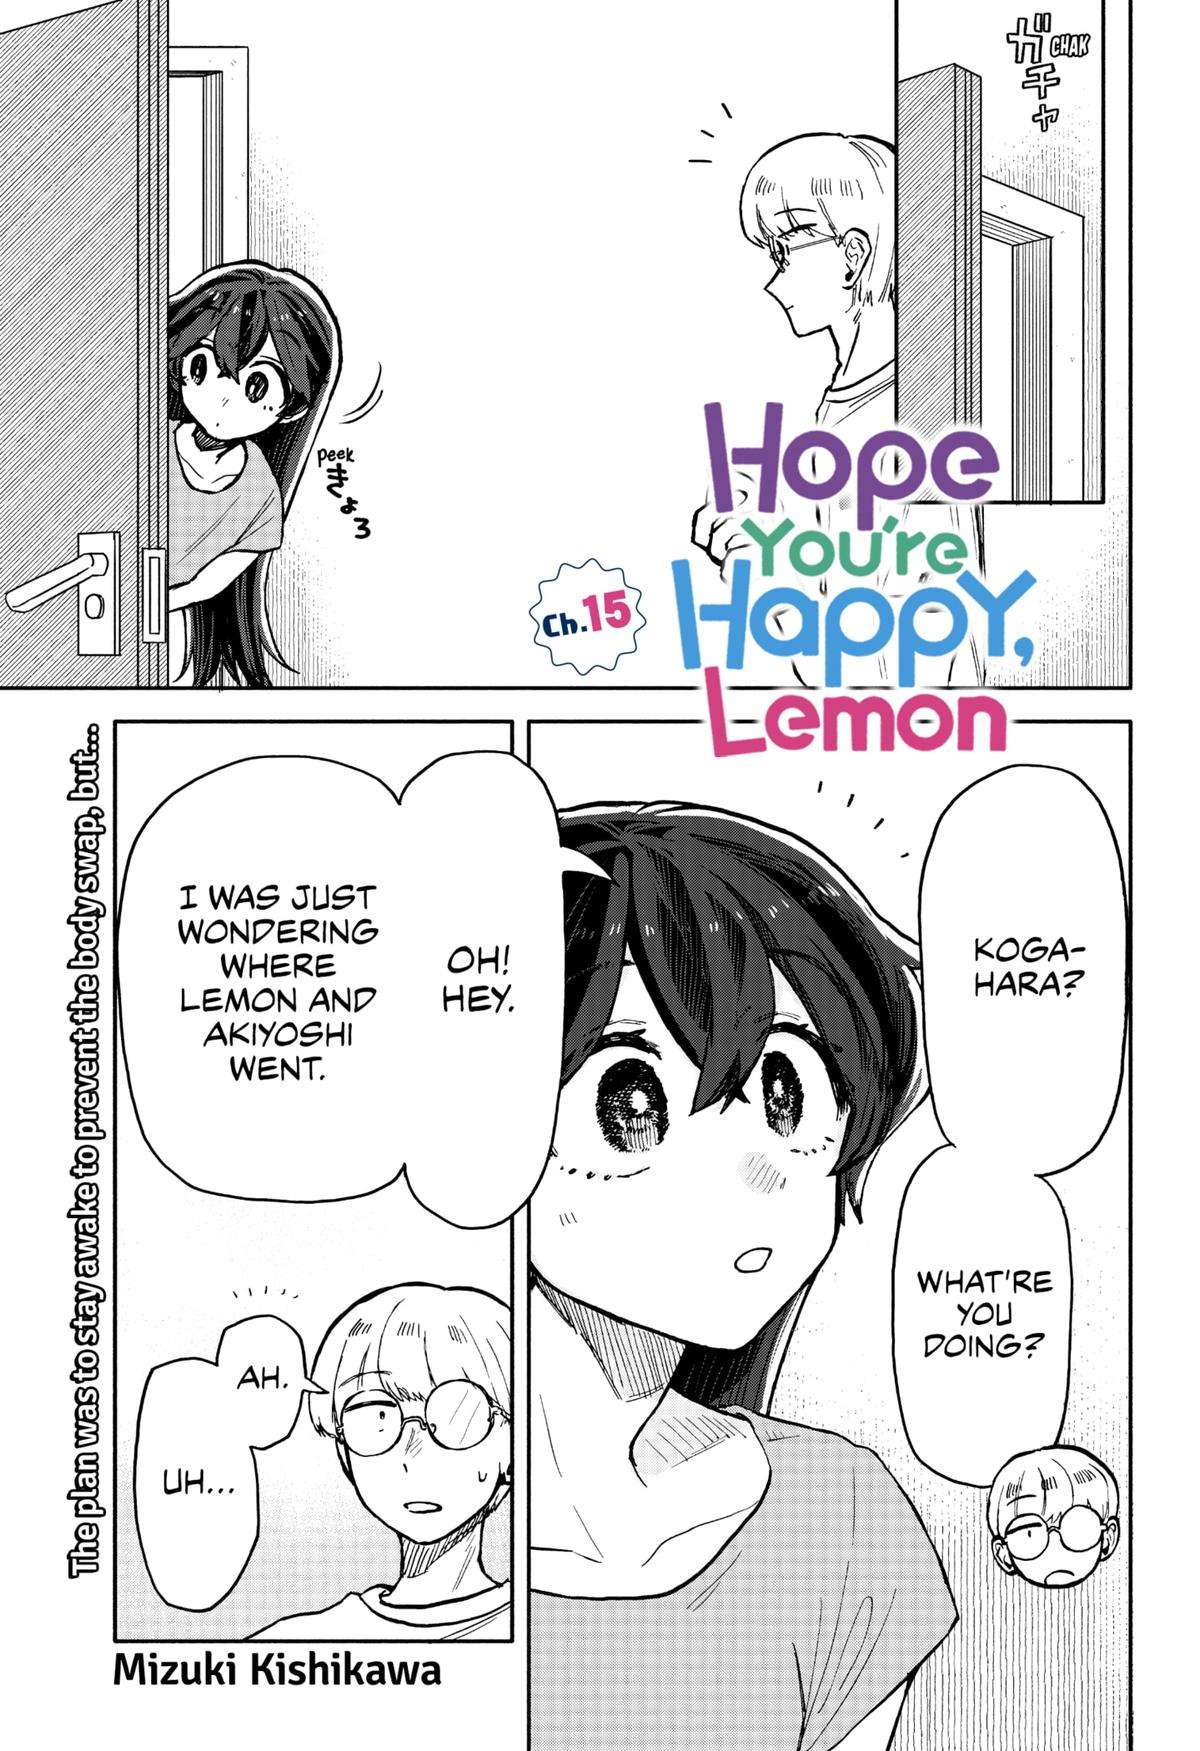 Hope You're Happy, Lemon - chapter 15 - #1